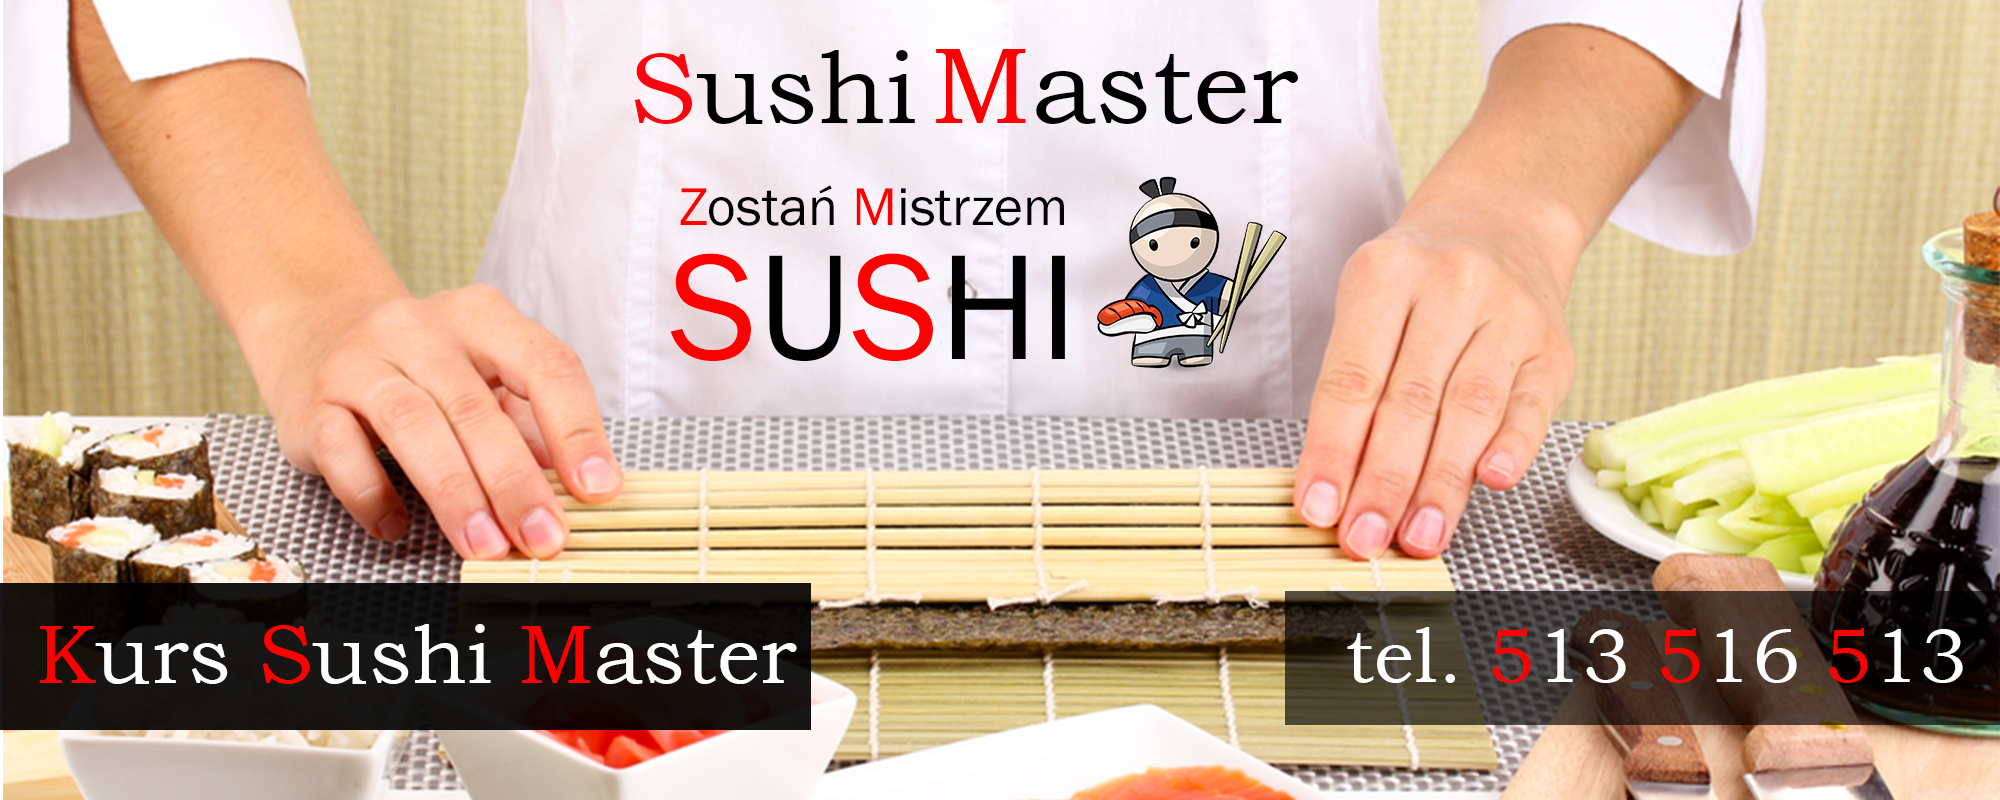 Kursanci Kurs sushi master